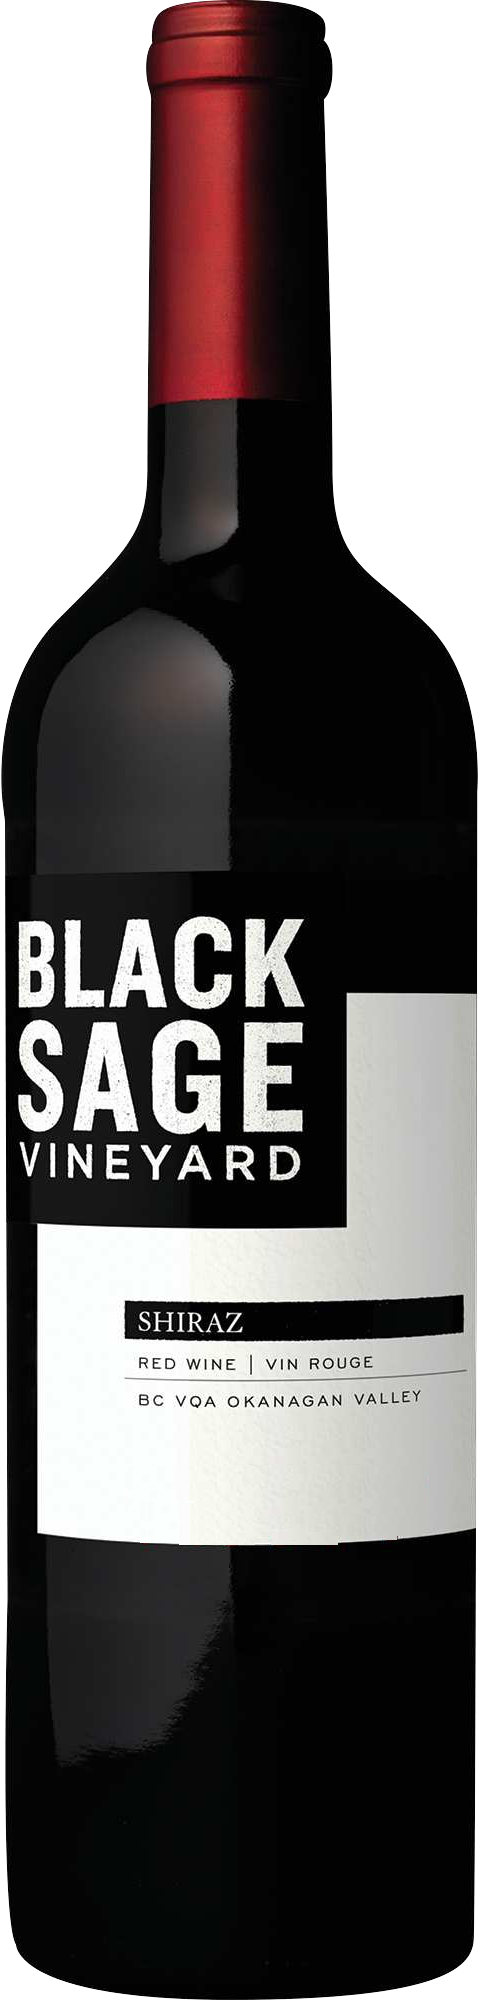 Black Sage Vineyard Shiraz 2019 Červené 13.0% 0.75 l